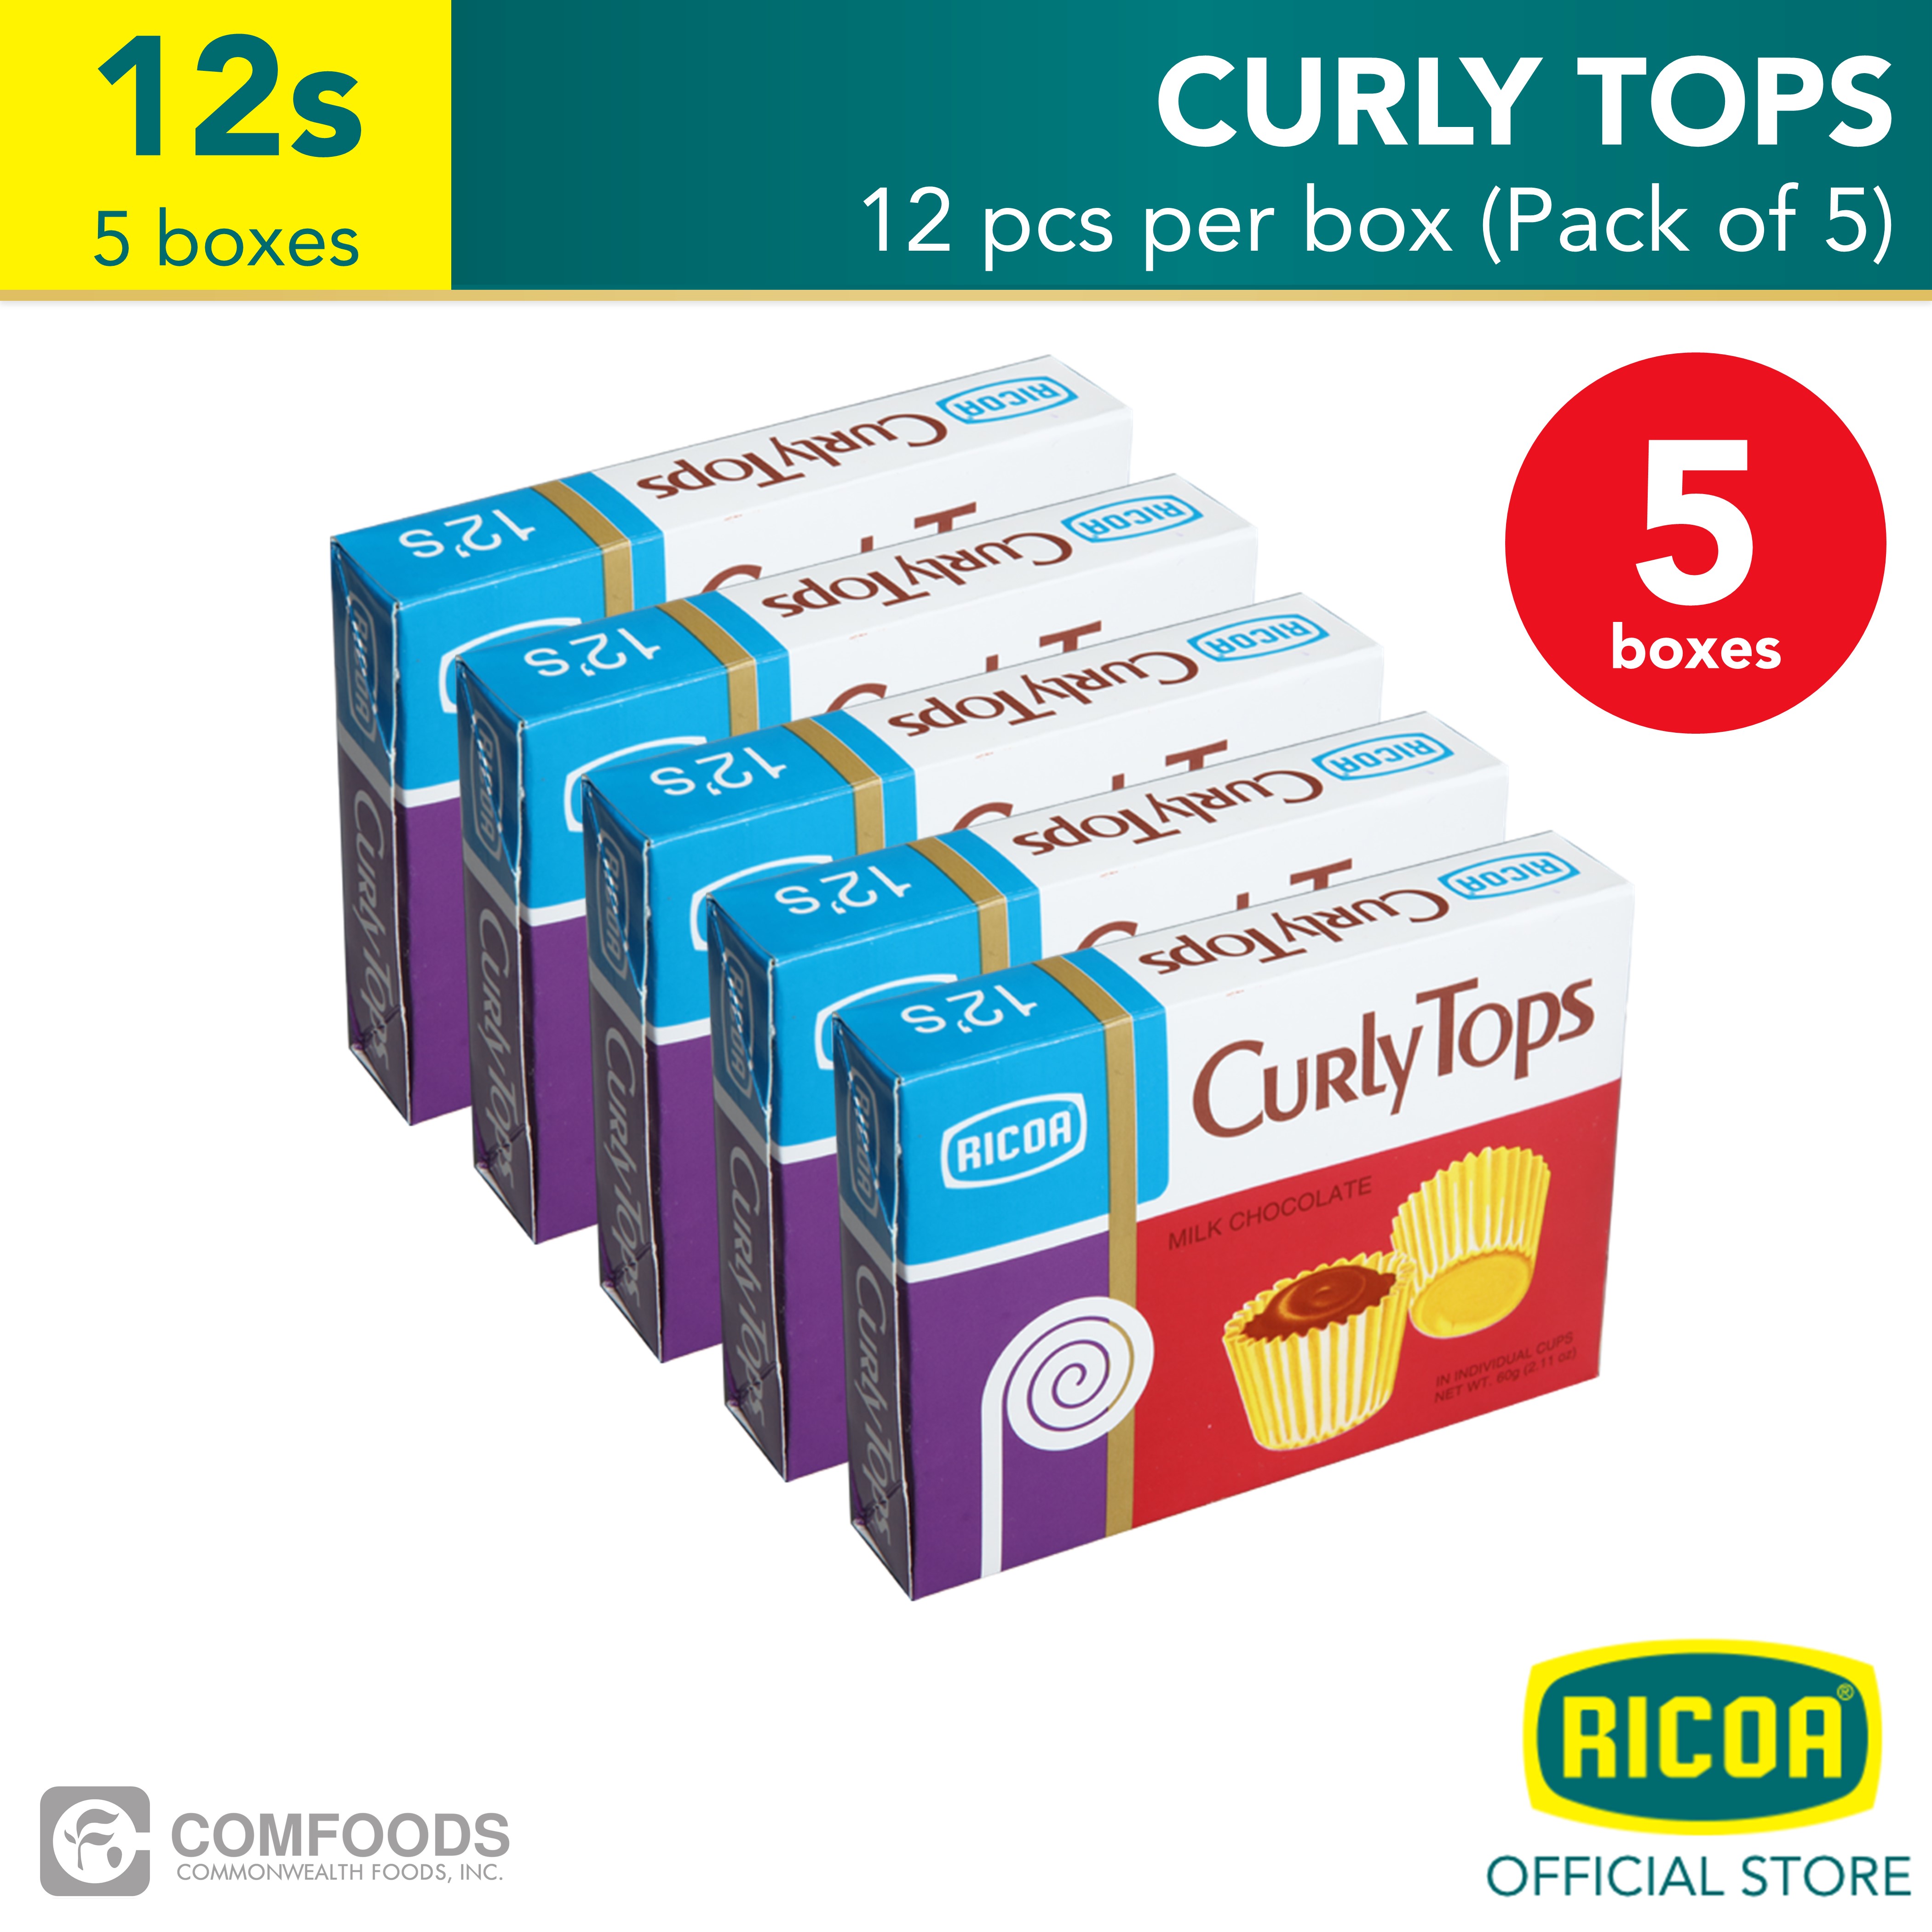 RICOA Curly Tops Milk Chocolate 12 Pcs in Box